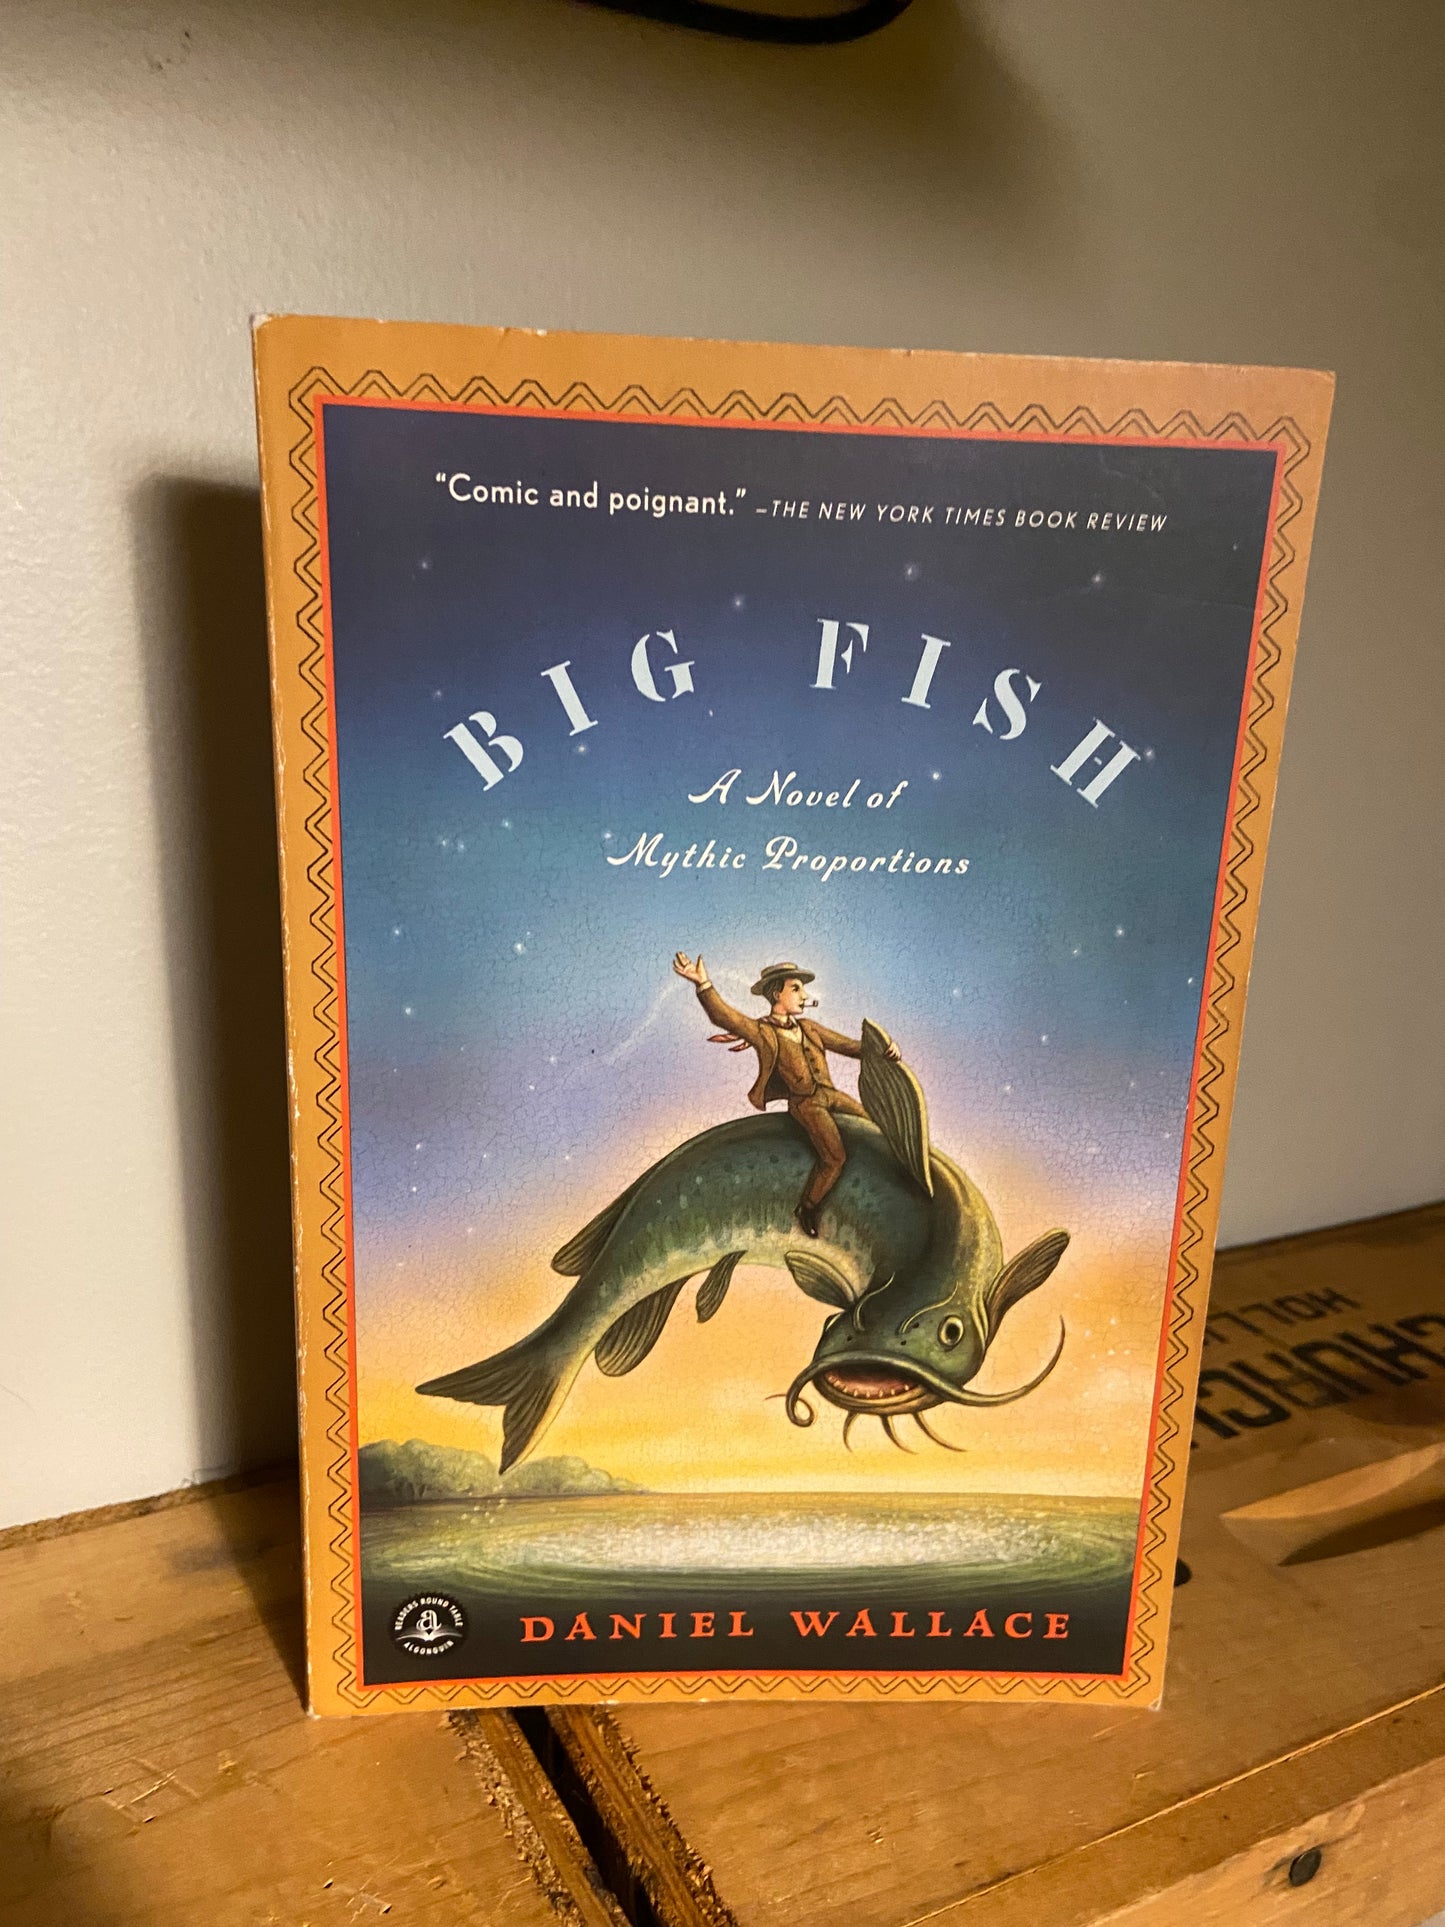 Big Fish - Daniel Wallace